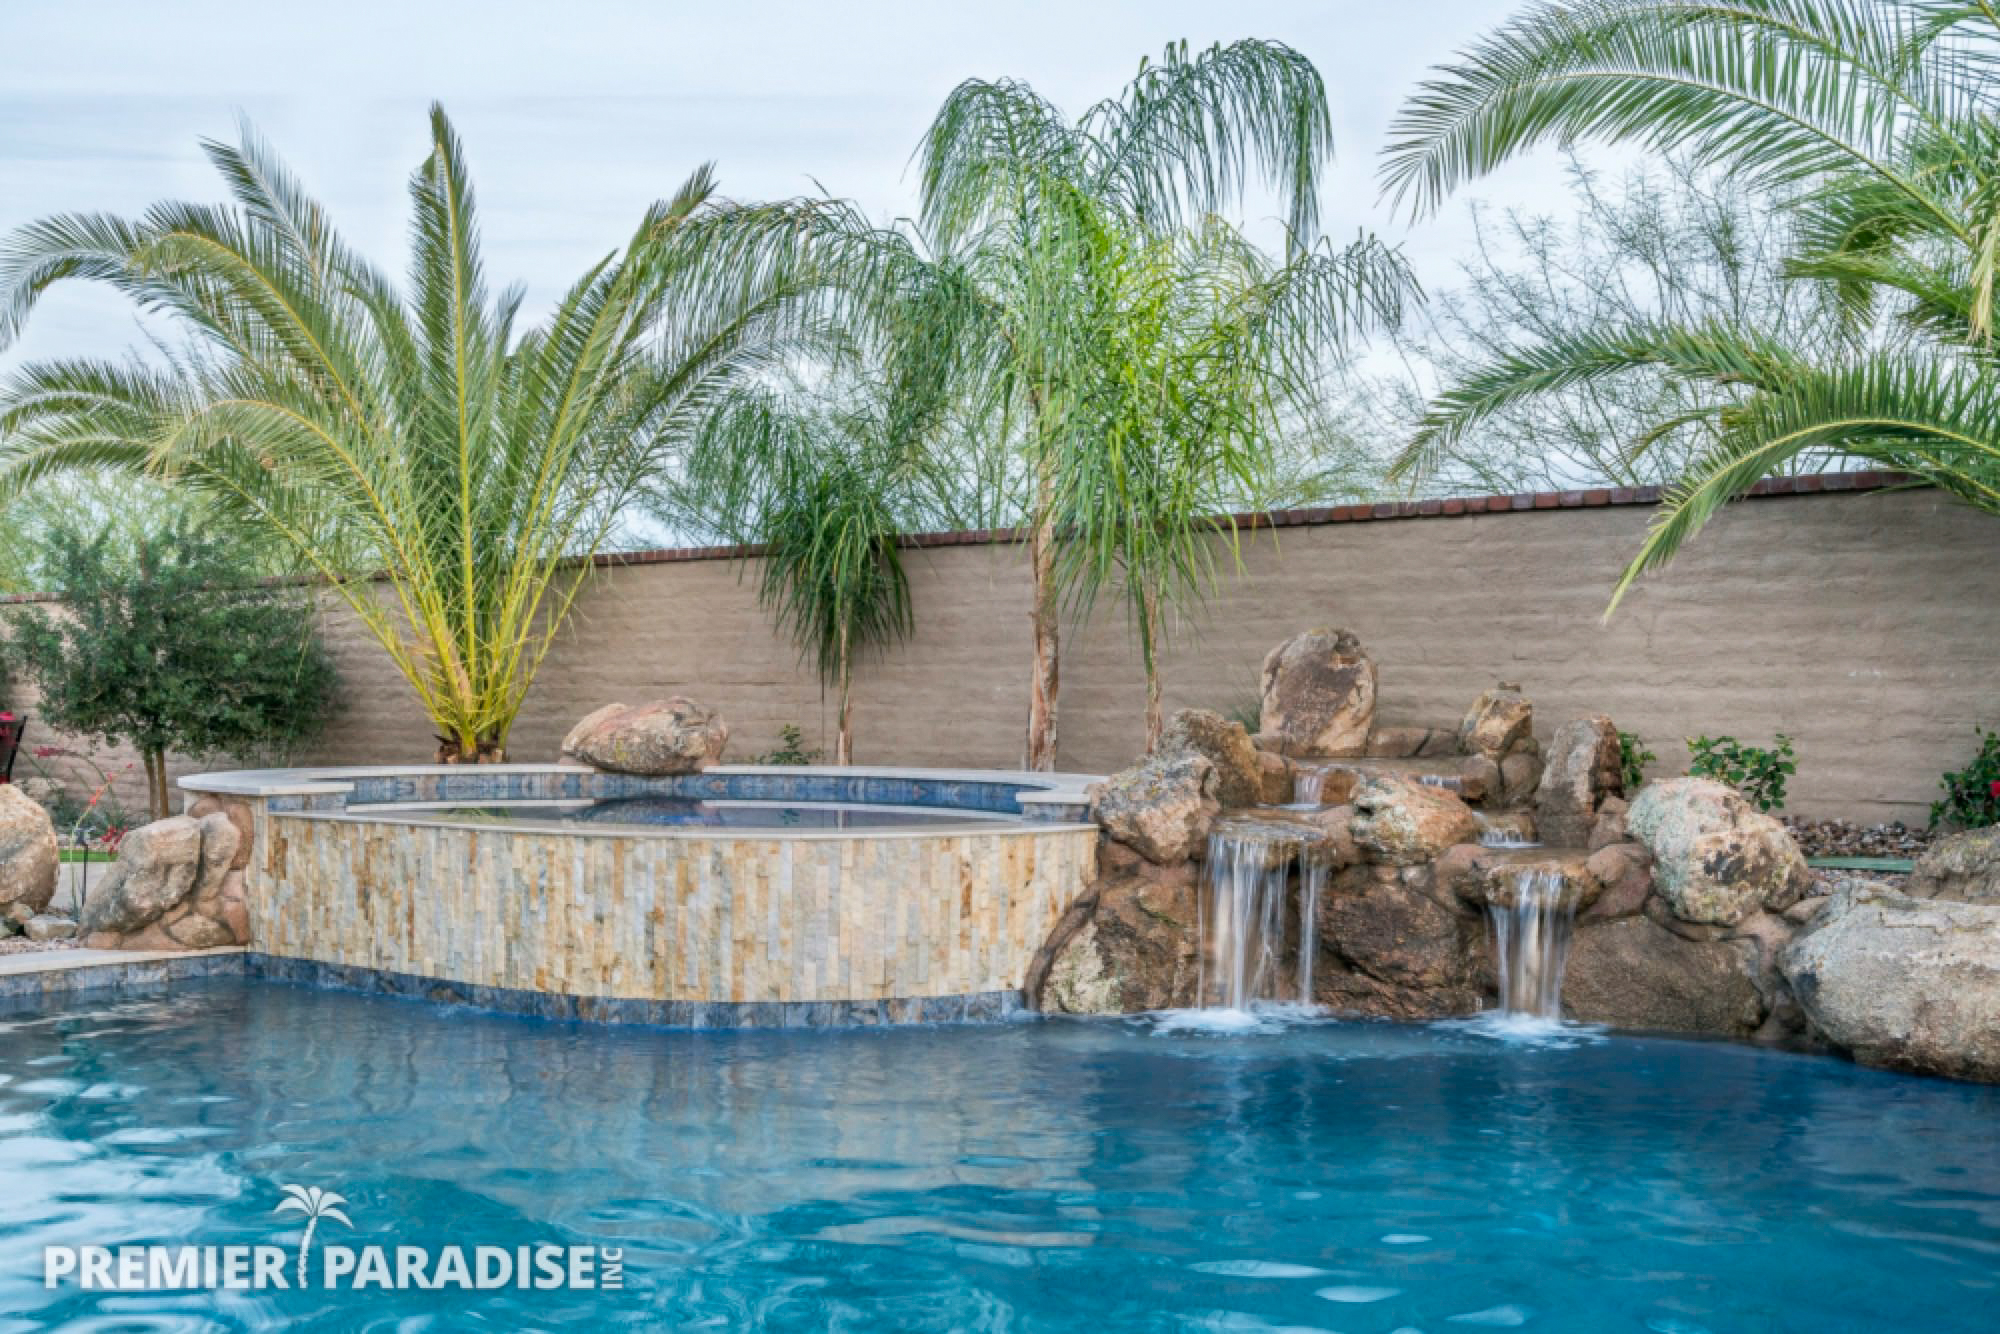 pool designs premier paradise scottsdale gilbert queen creek phoenix arizona kalesnikoff 4 w